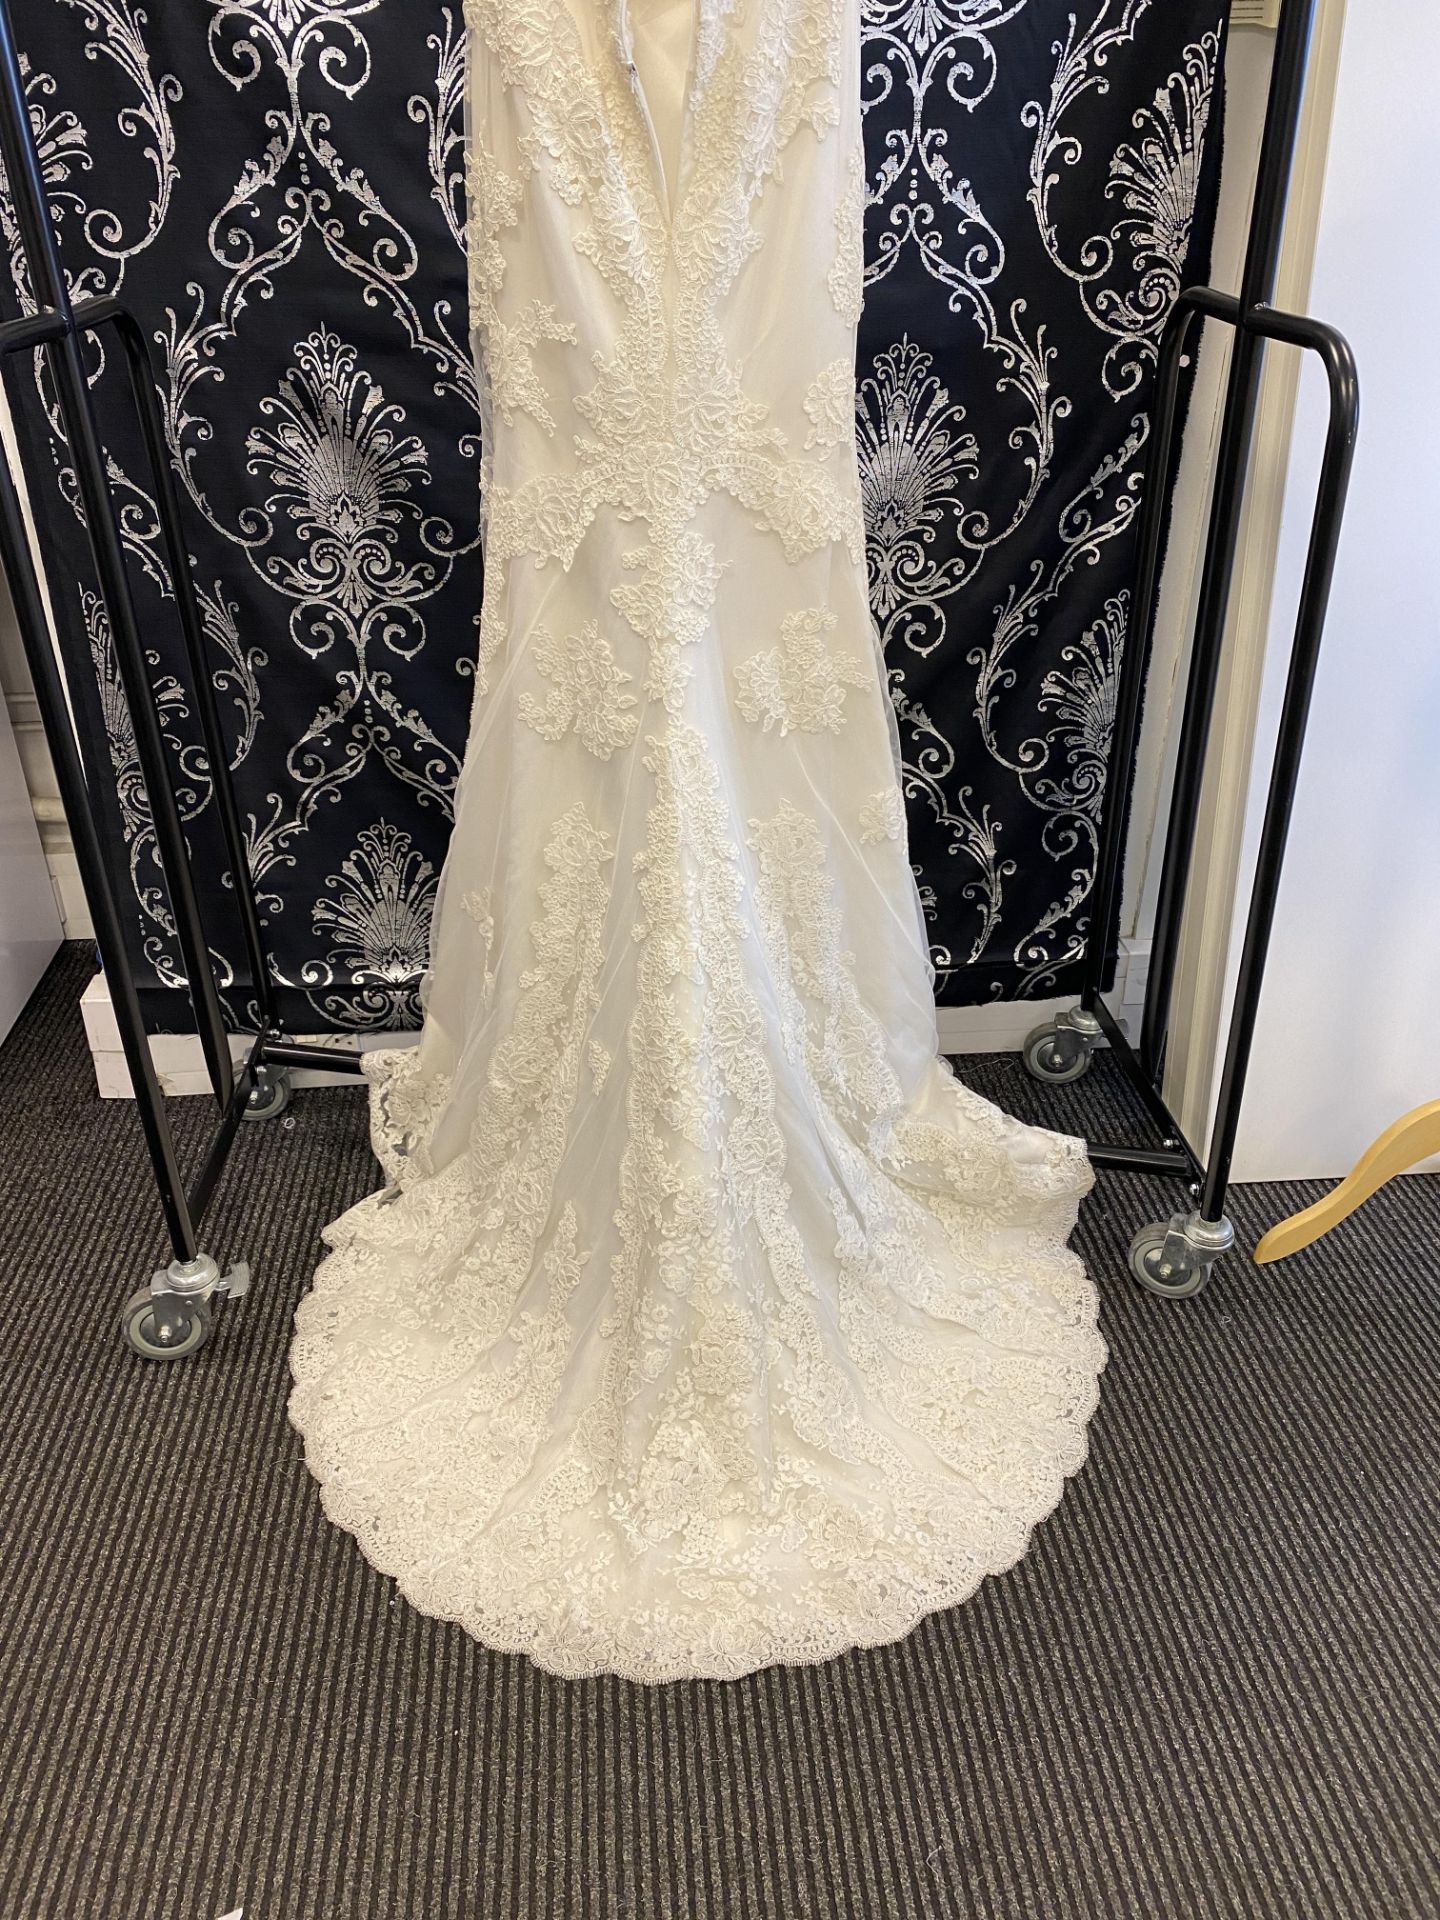 1 x LUSAN MANDONGUS 'Valli' Stunning Strapless Lace Overlay Designer Wedding Dress RRP £1,575 UK10 - Image 4 of 9